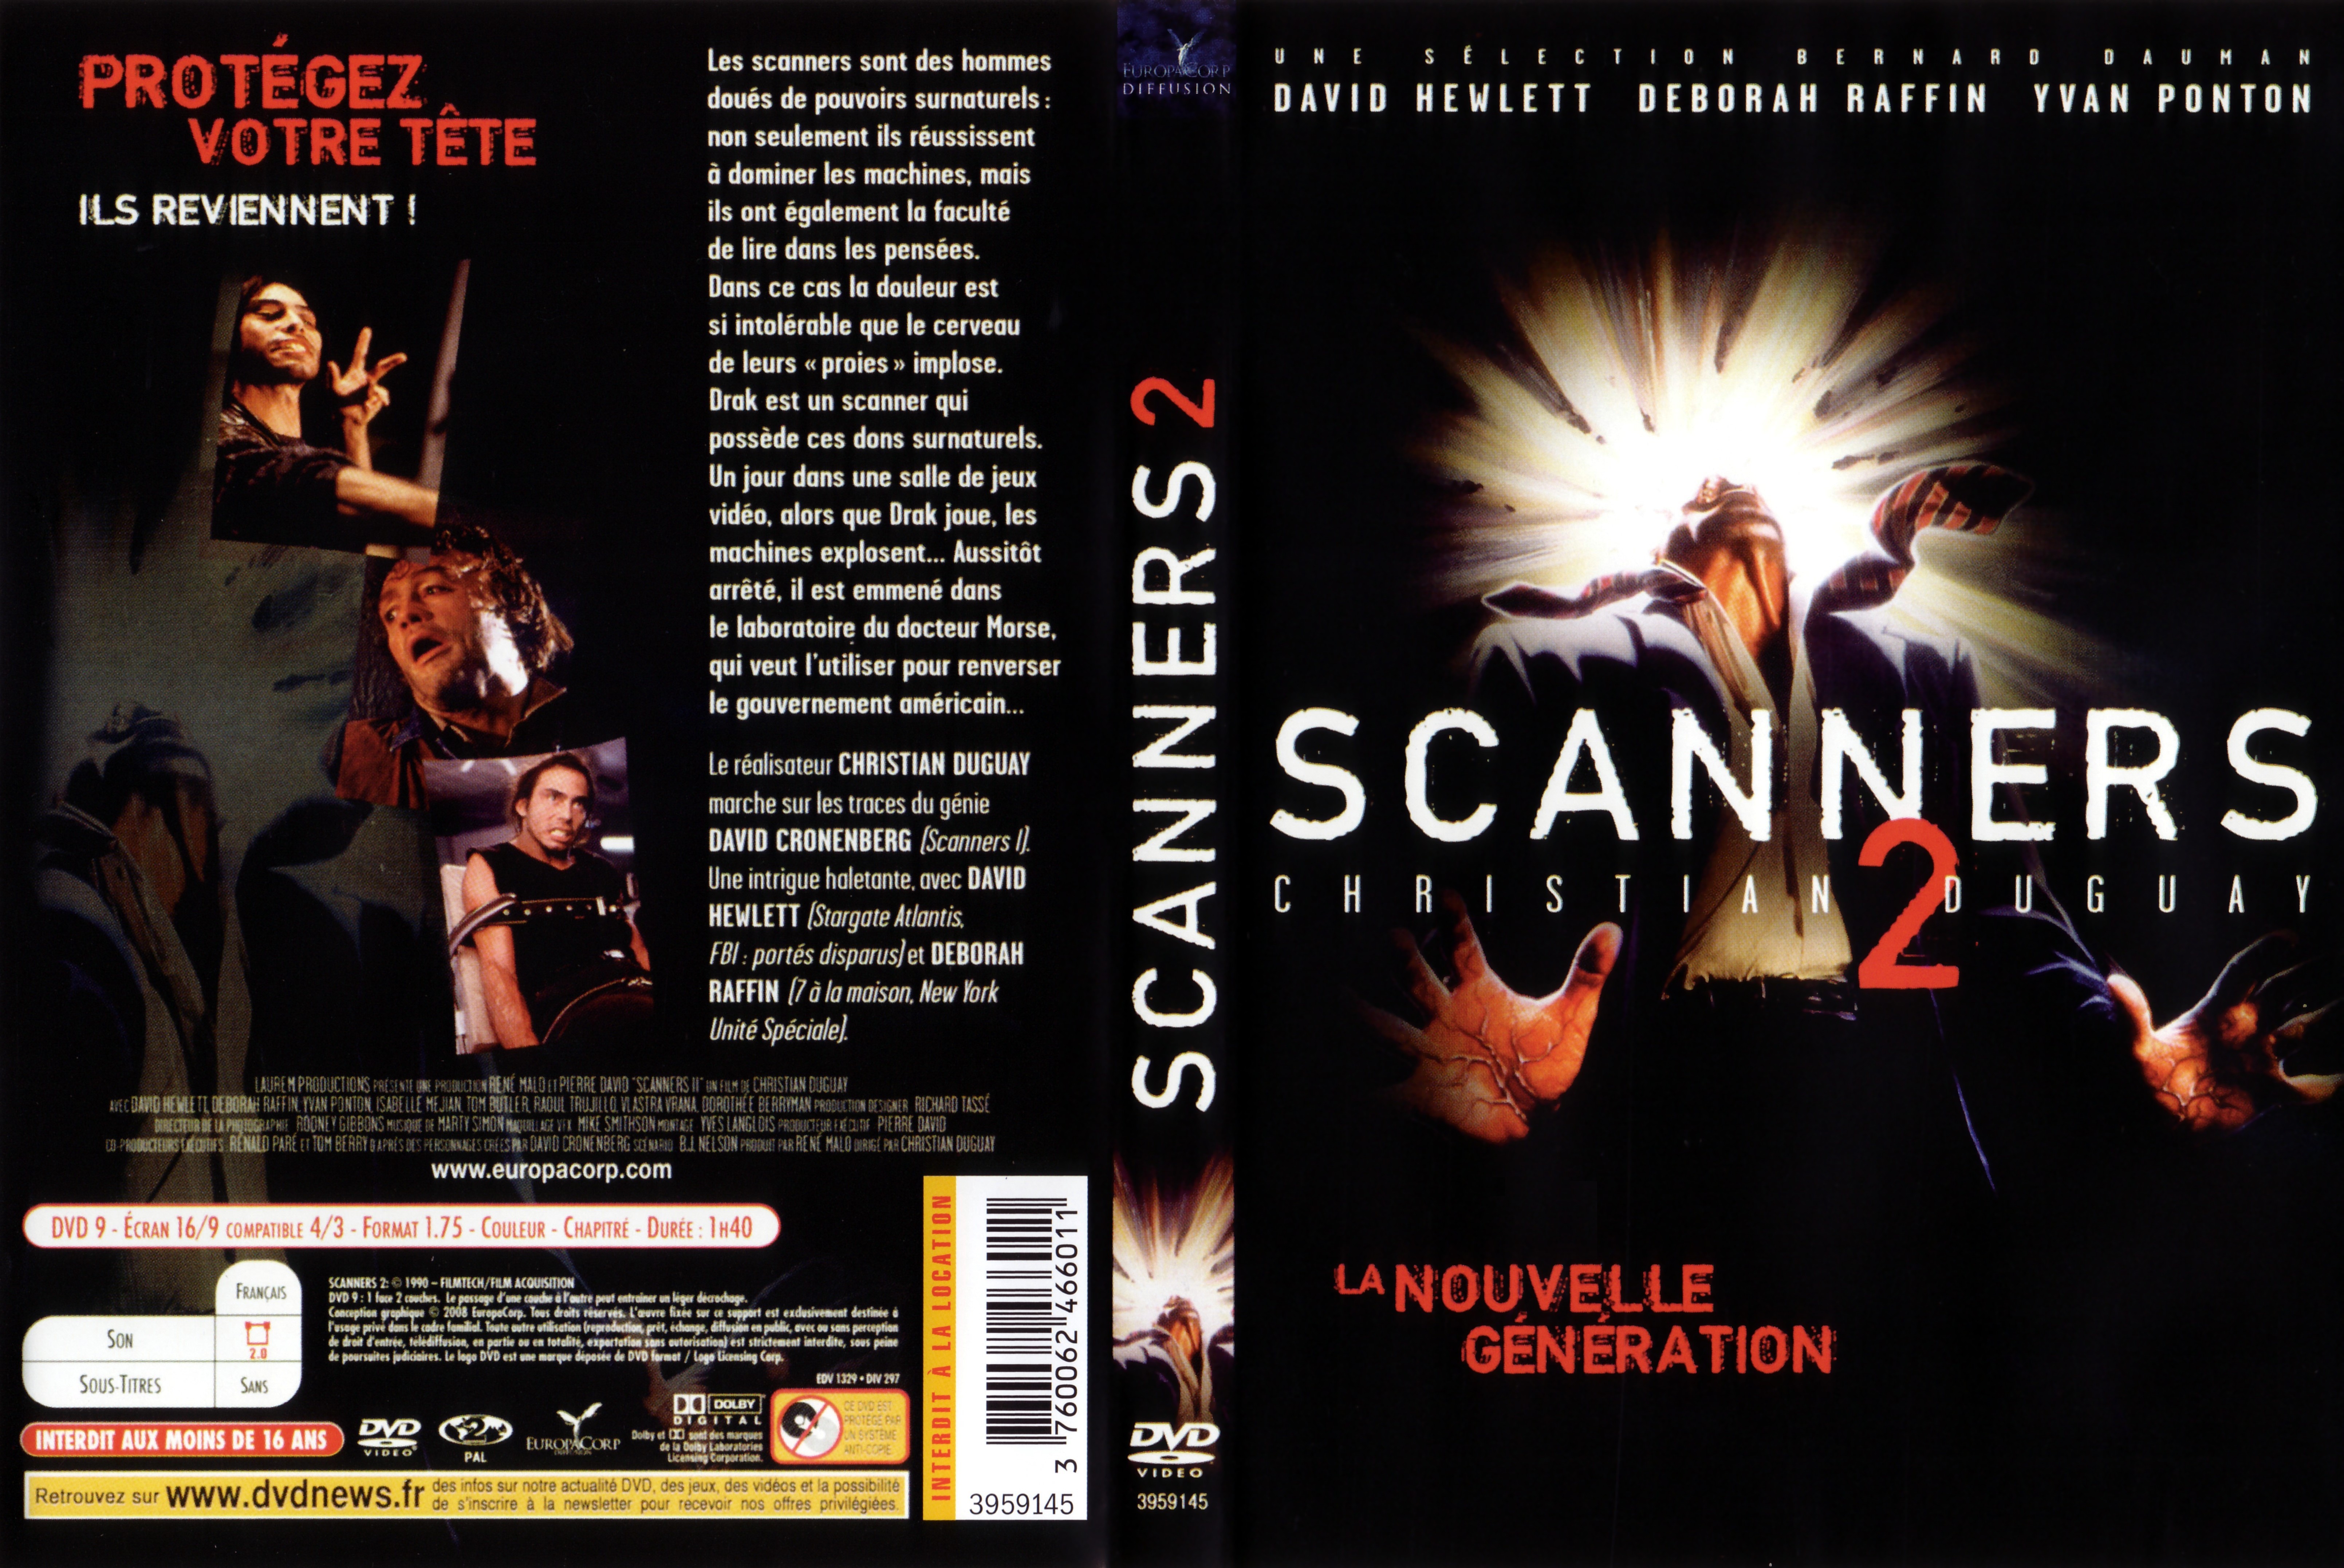 Jaquette DVD Scanners 2 v2